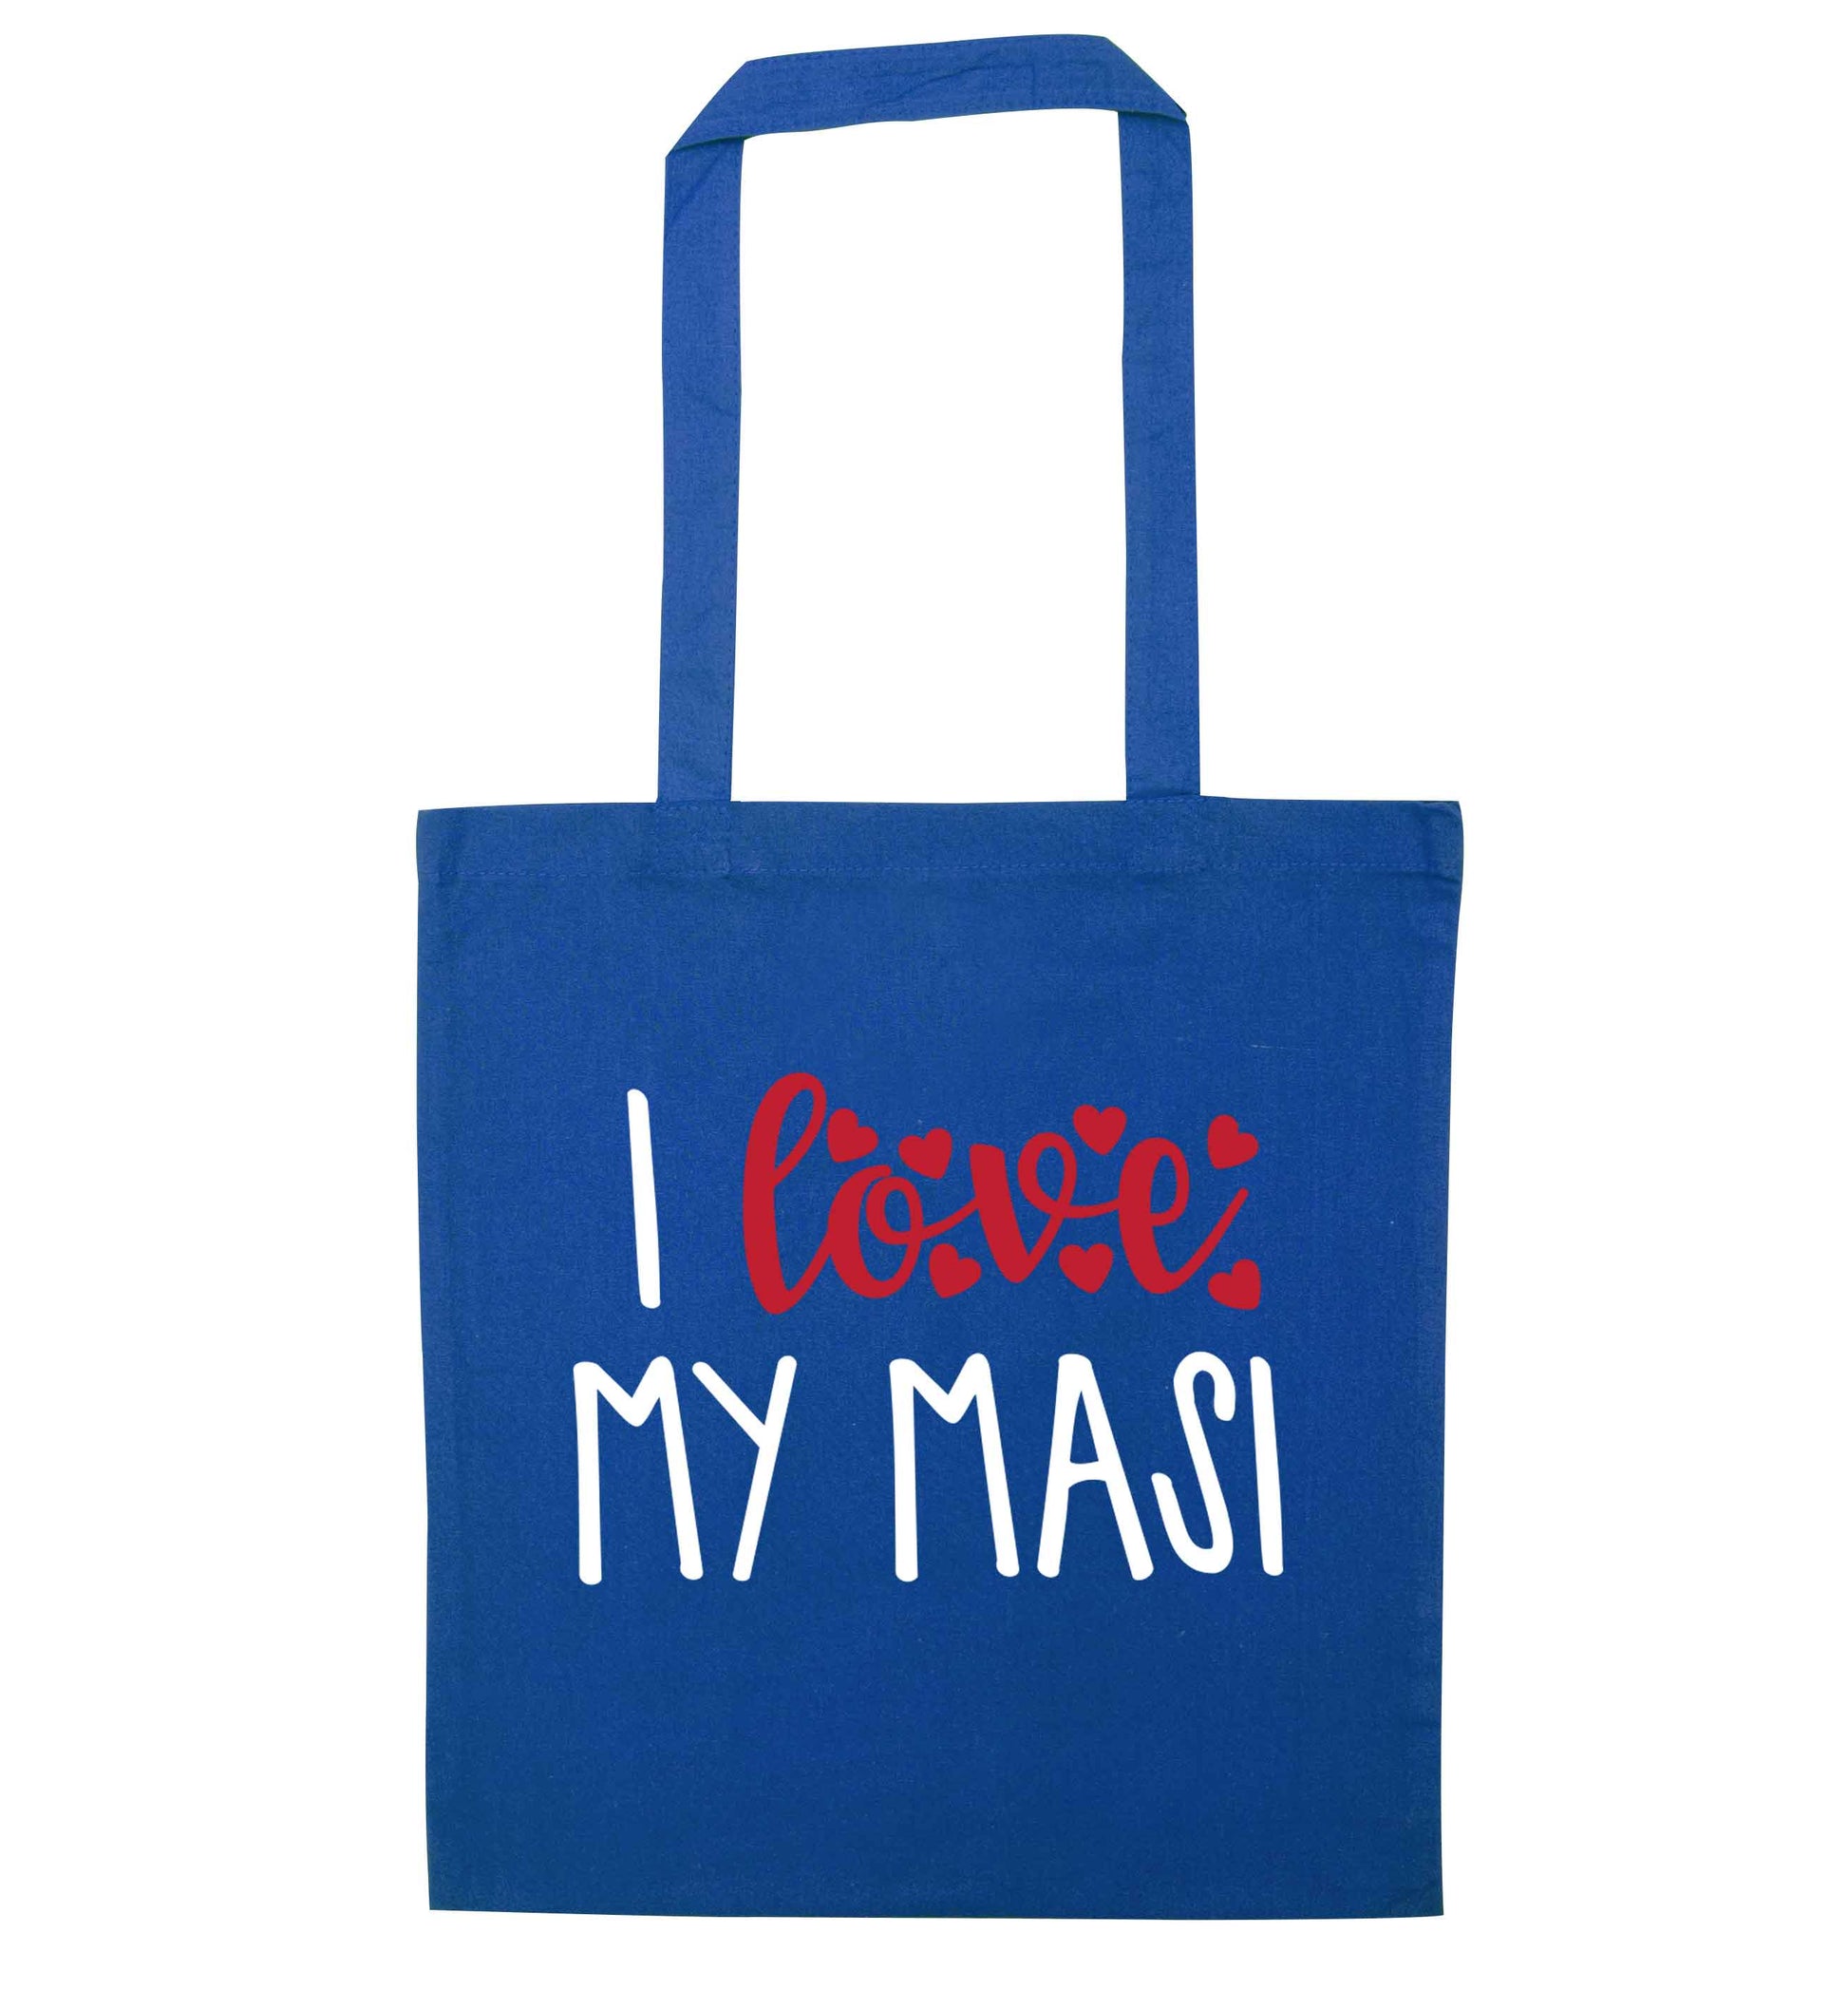 I love my masi blue tote bag